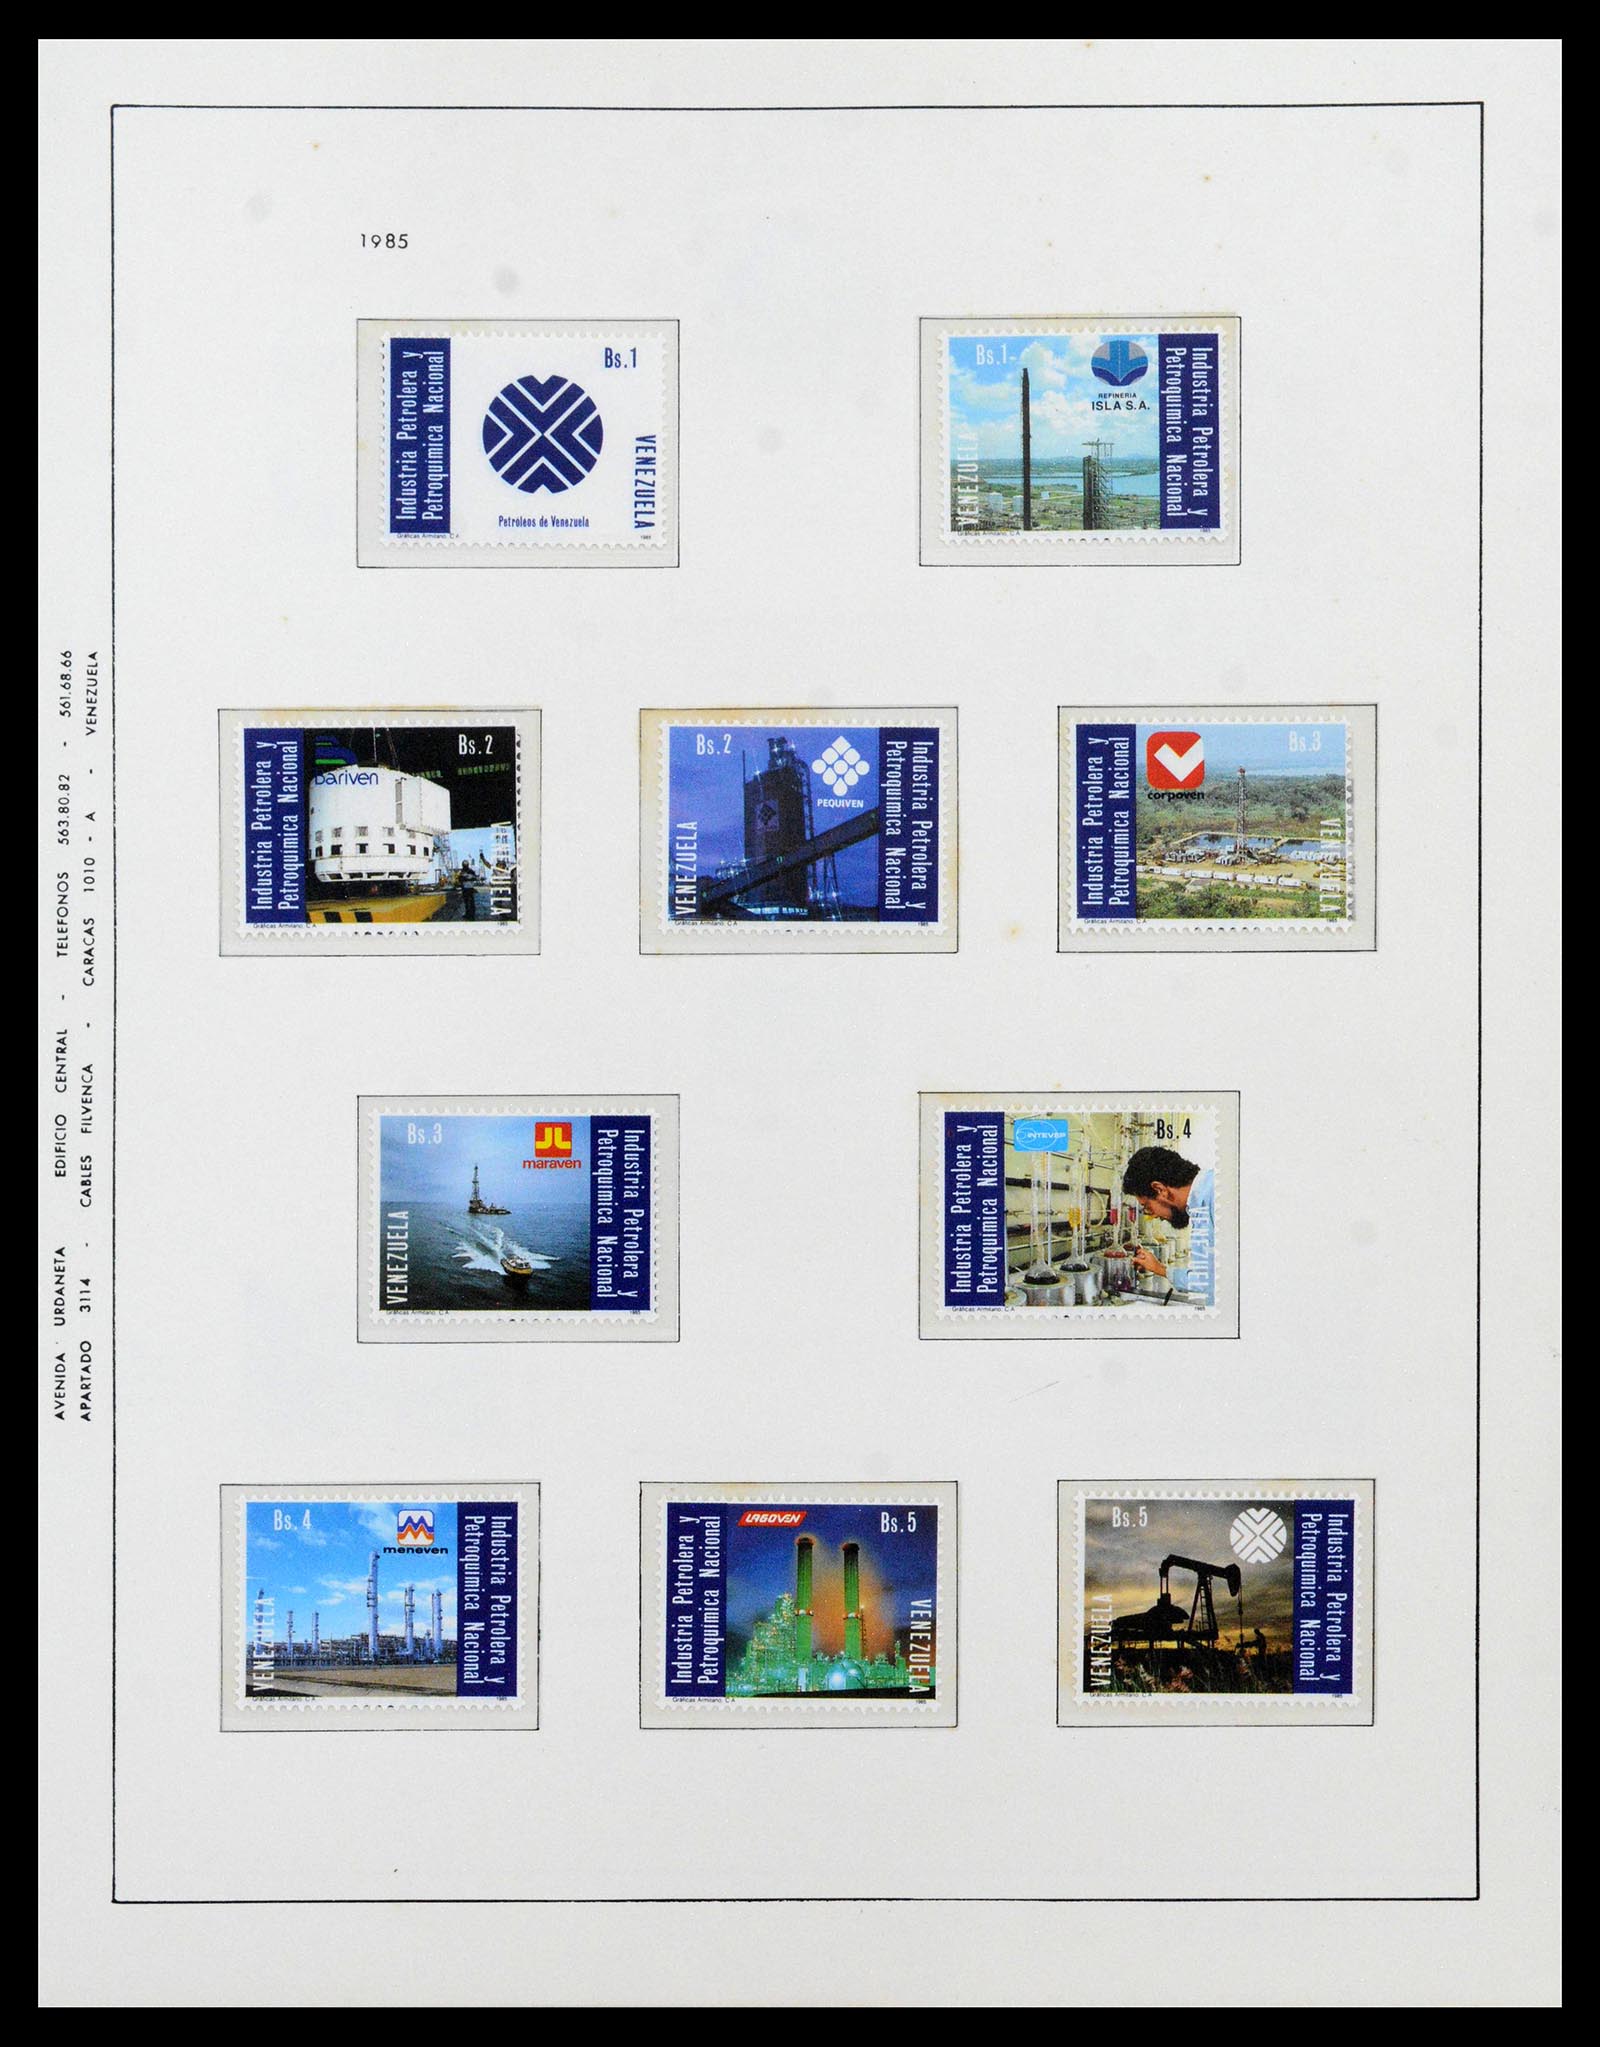 39436 0242 - Stamp collection 39436 Venezuela 1859-1985.